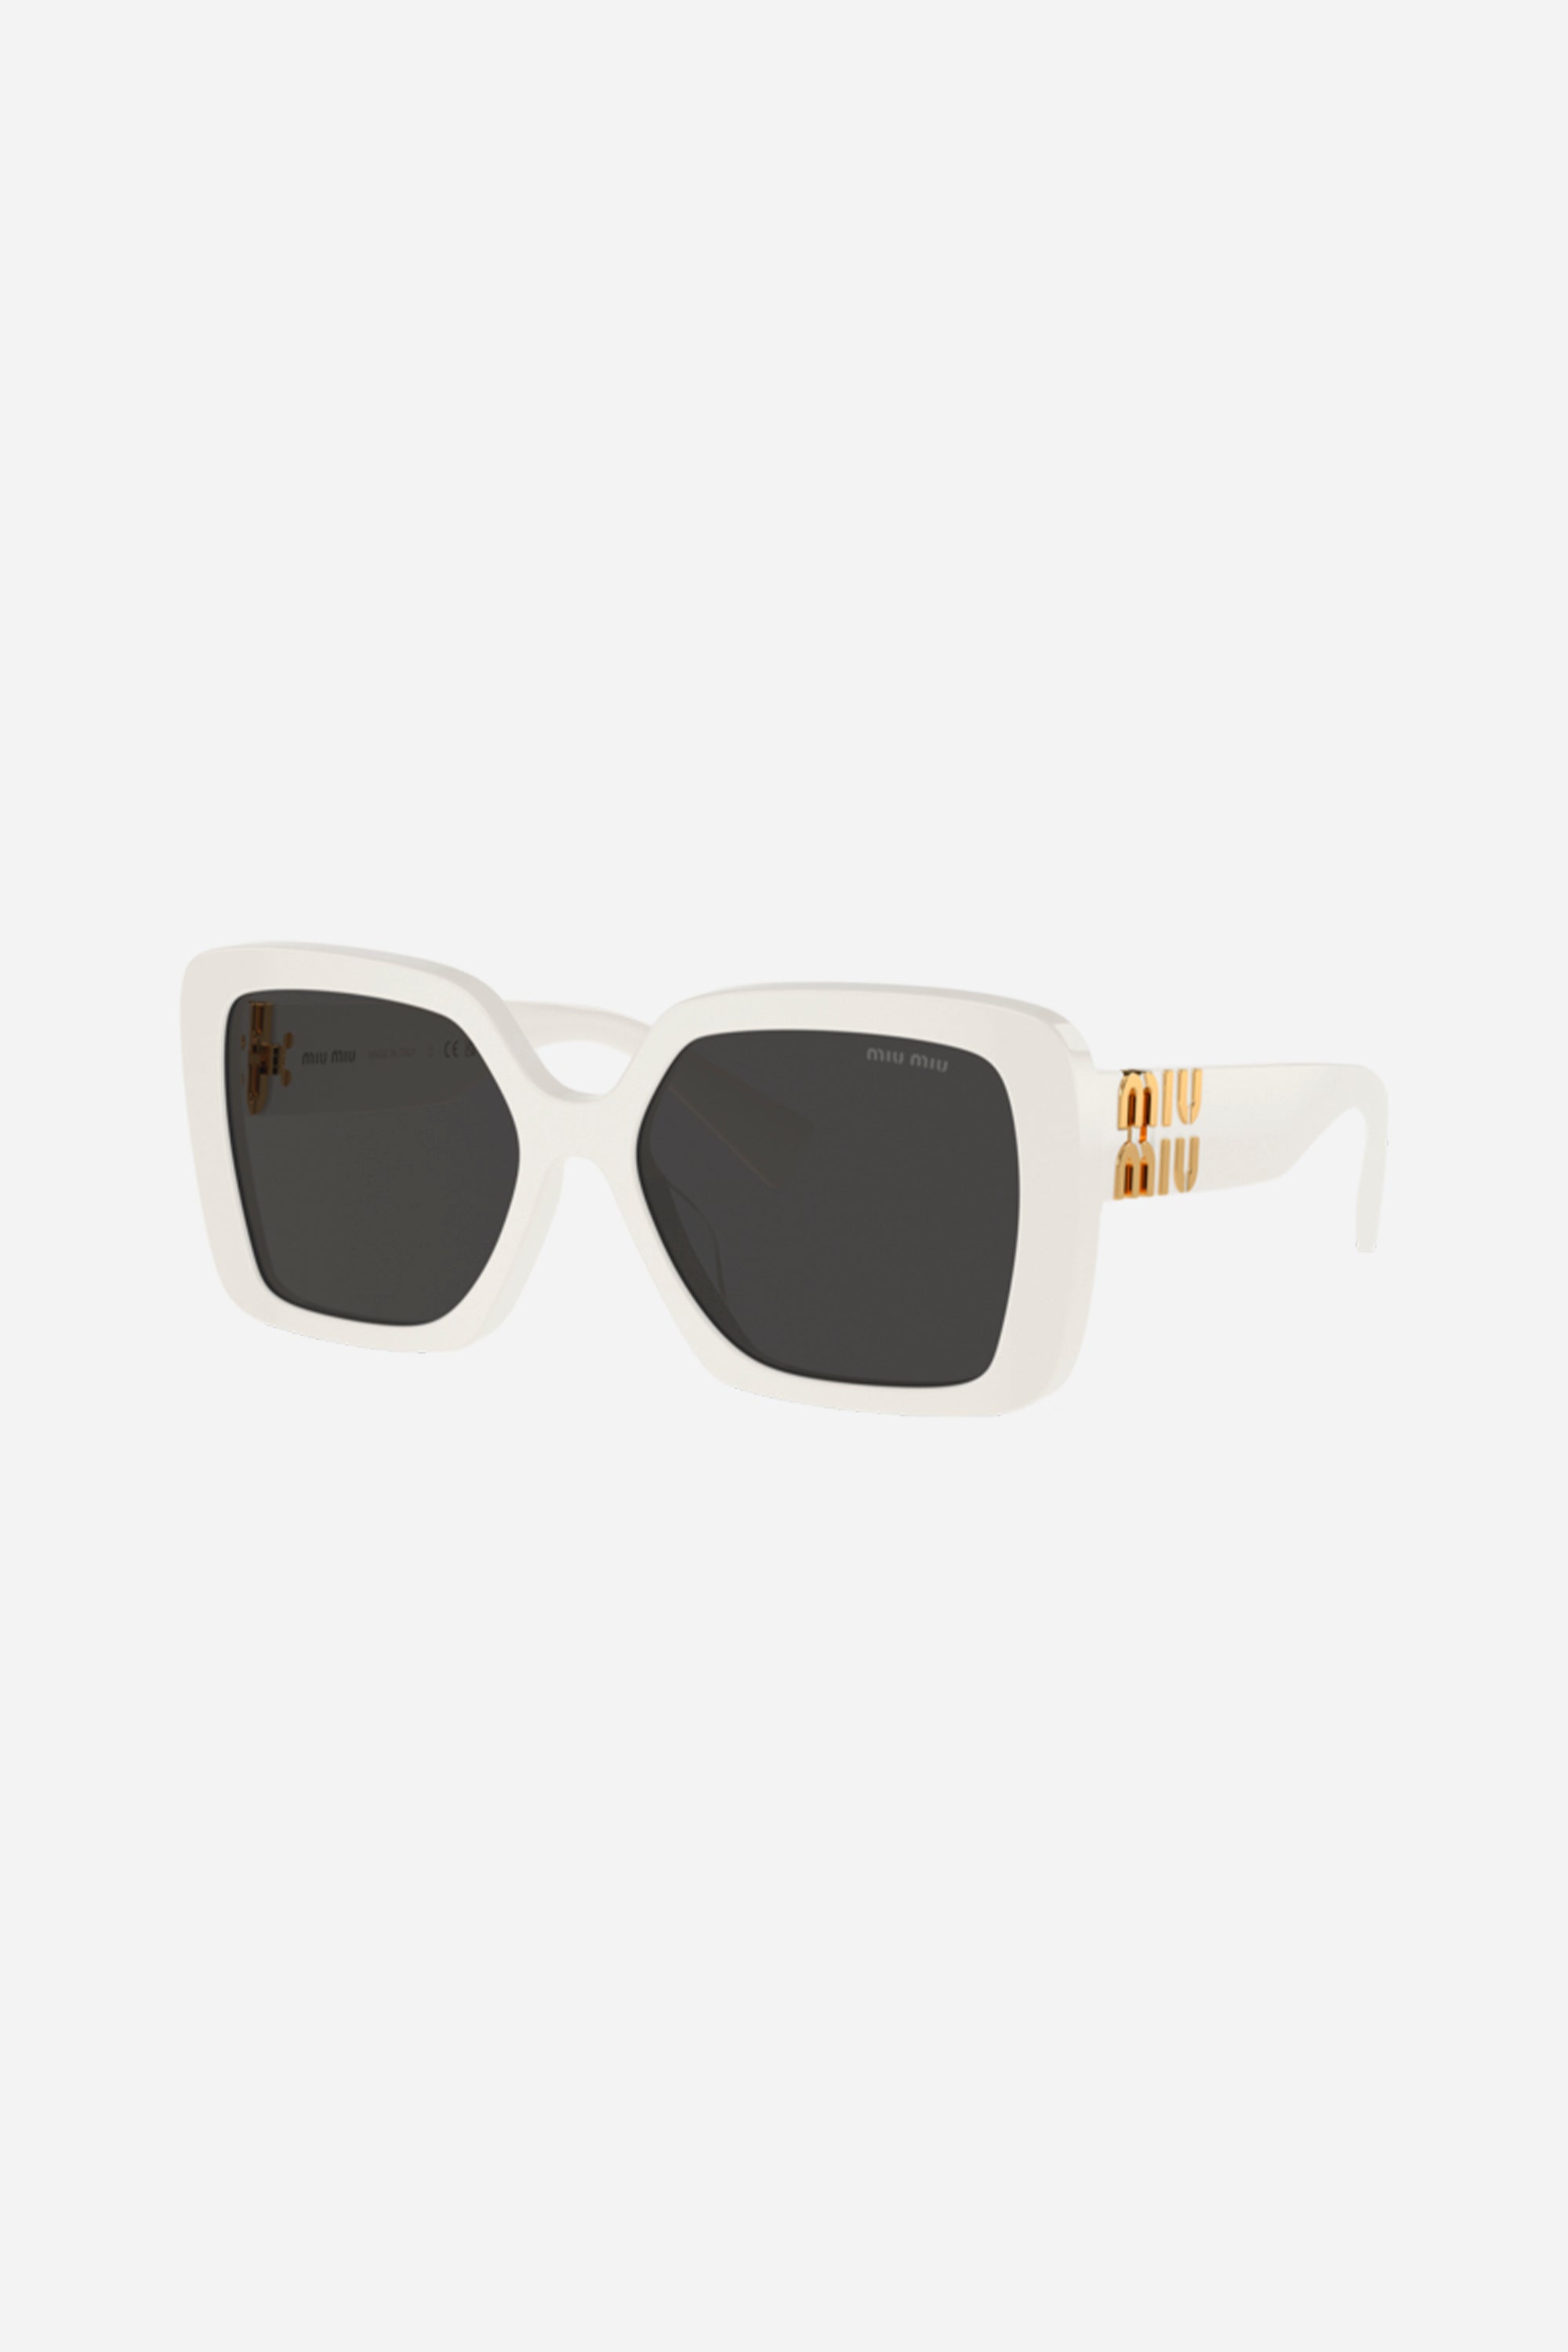 Miu Miu rectangular white acetate sunglasses - Eyewear Club